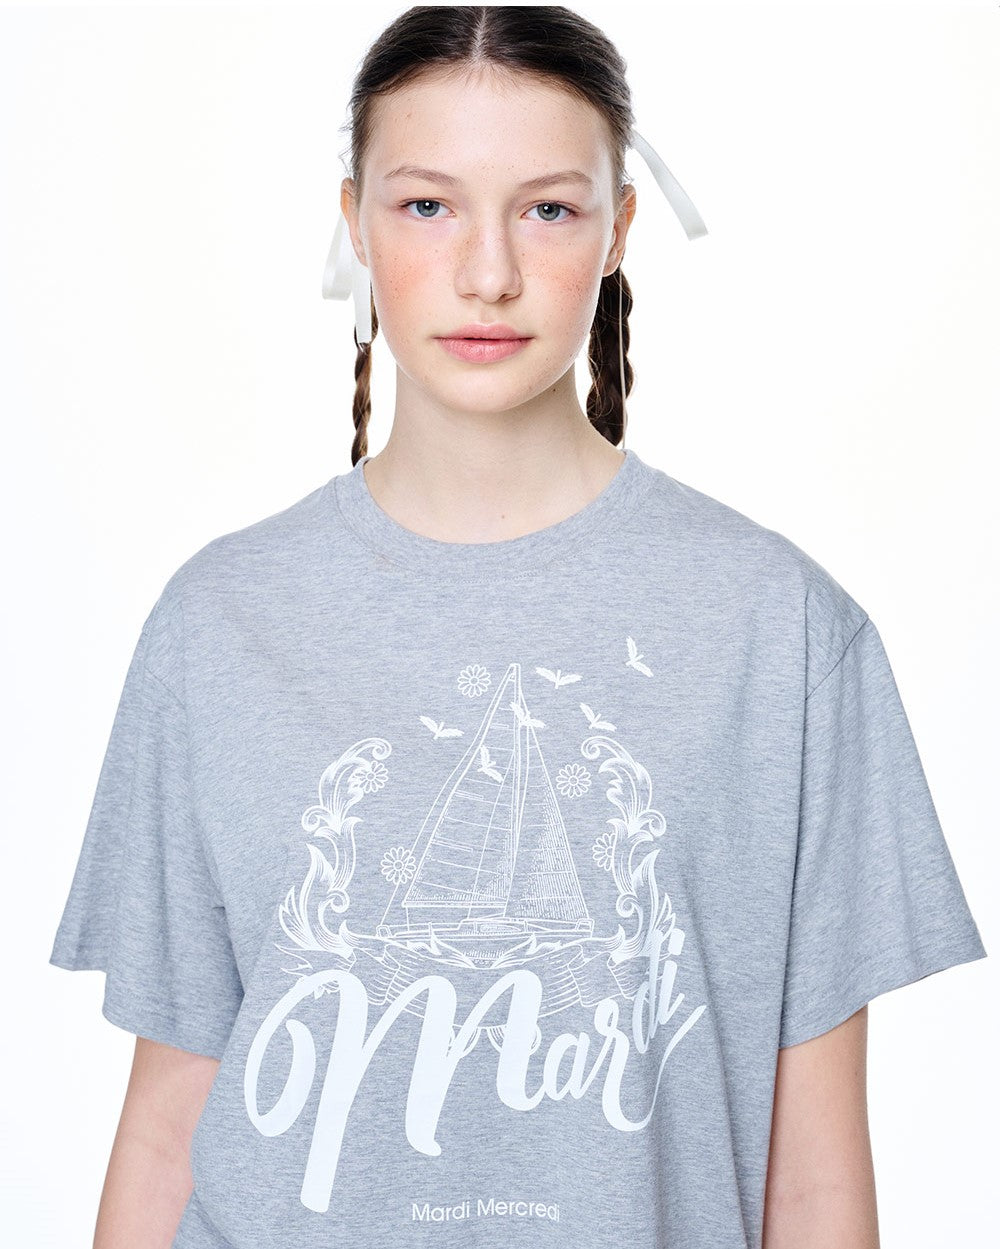 Mardi Mercredi • T-shirt Bon Voyage – Dear Sunday